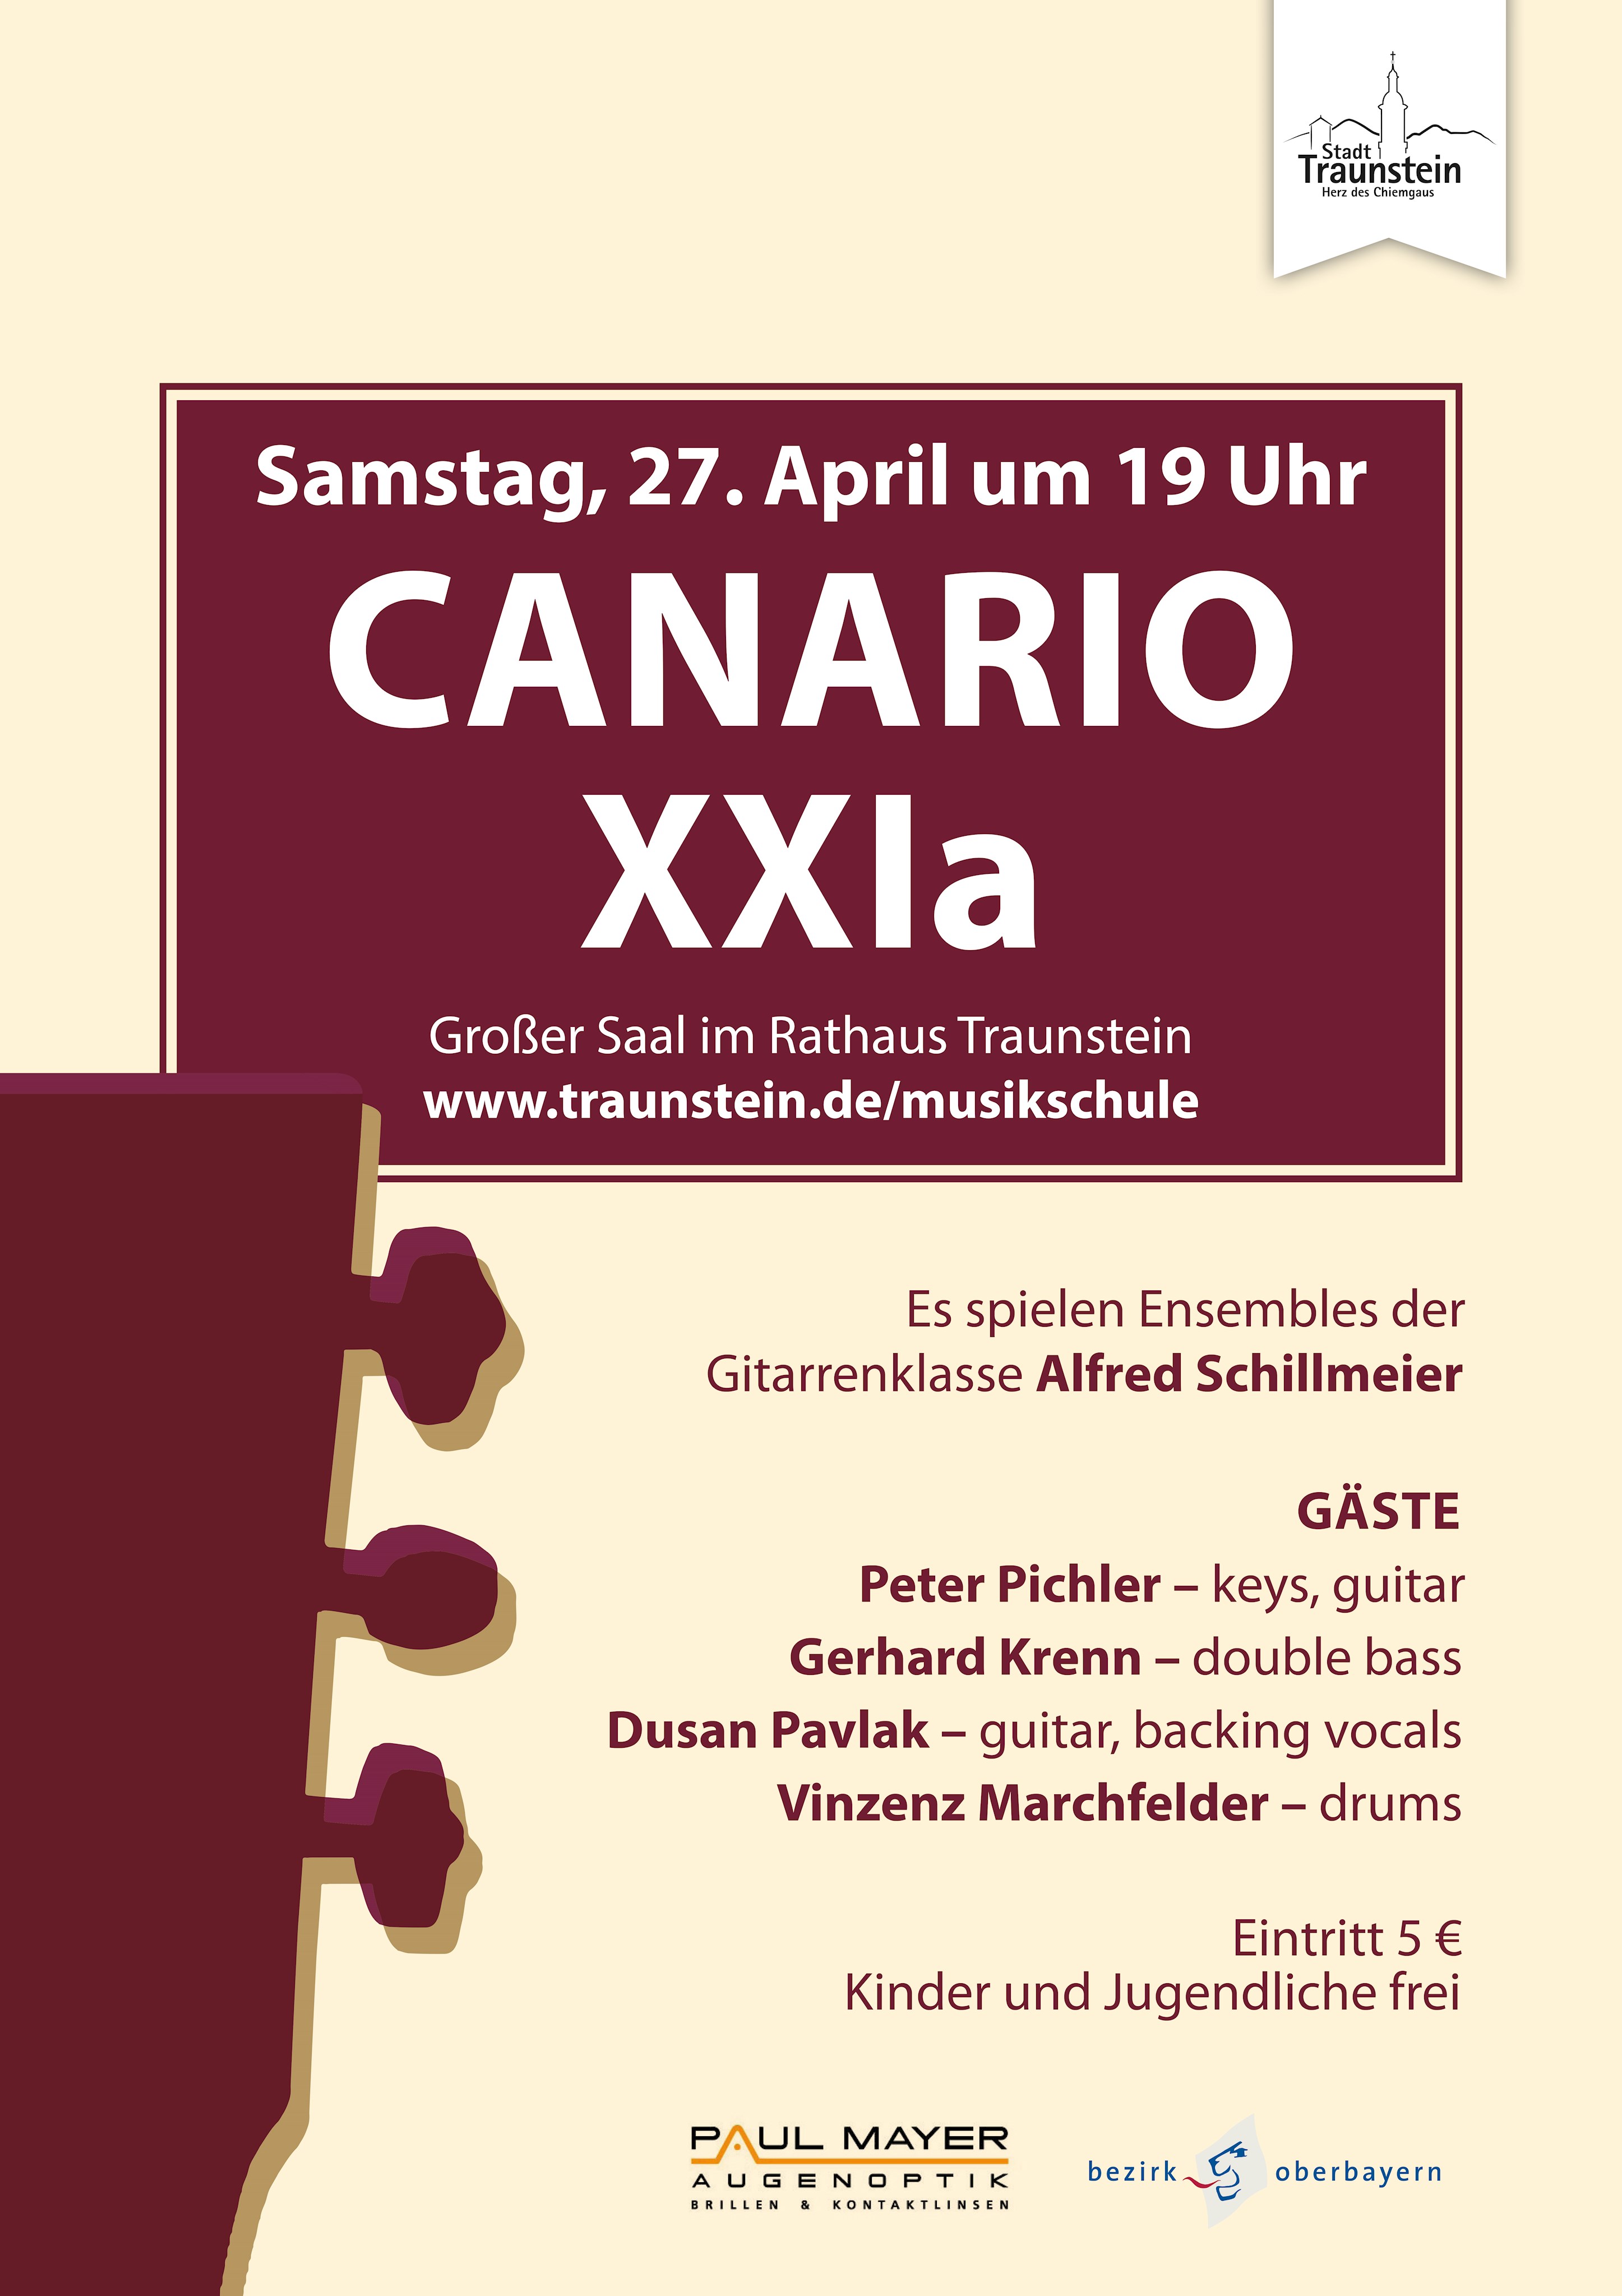 Konzert CANARIO XXIa am 27. April